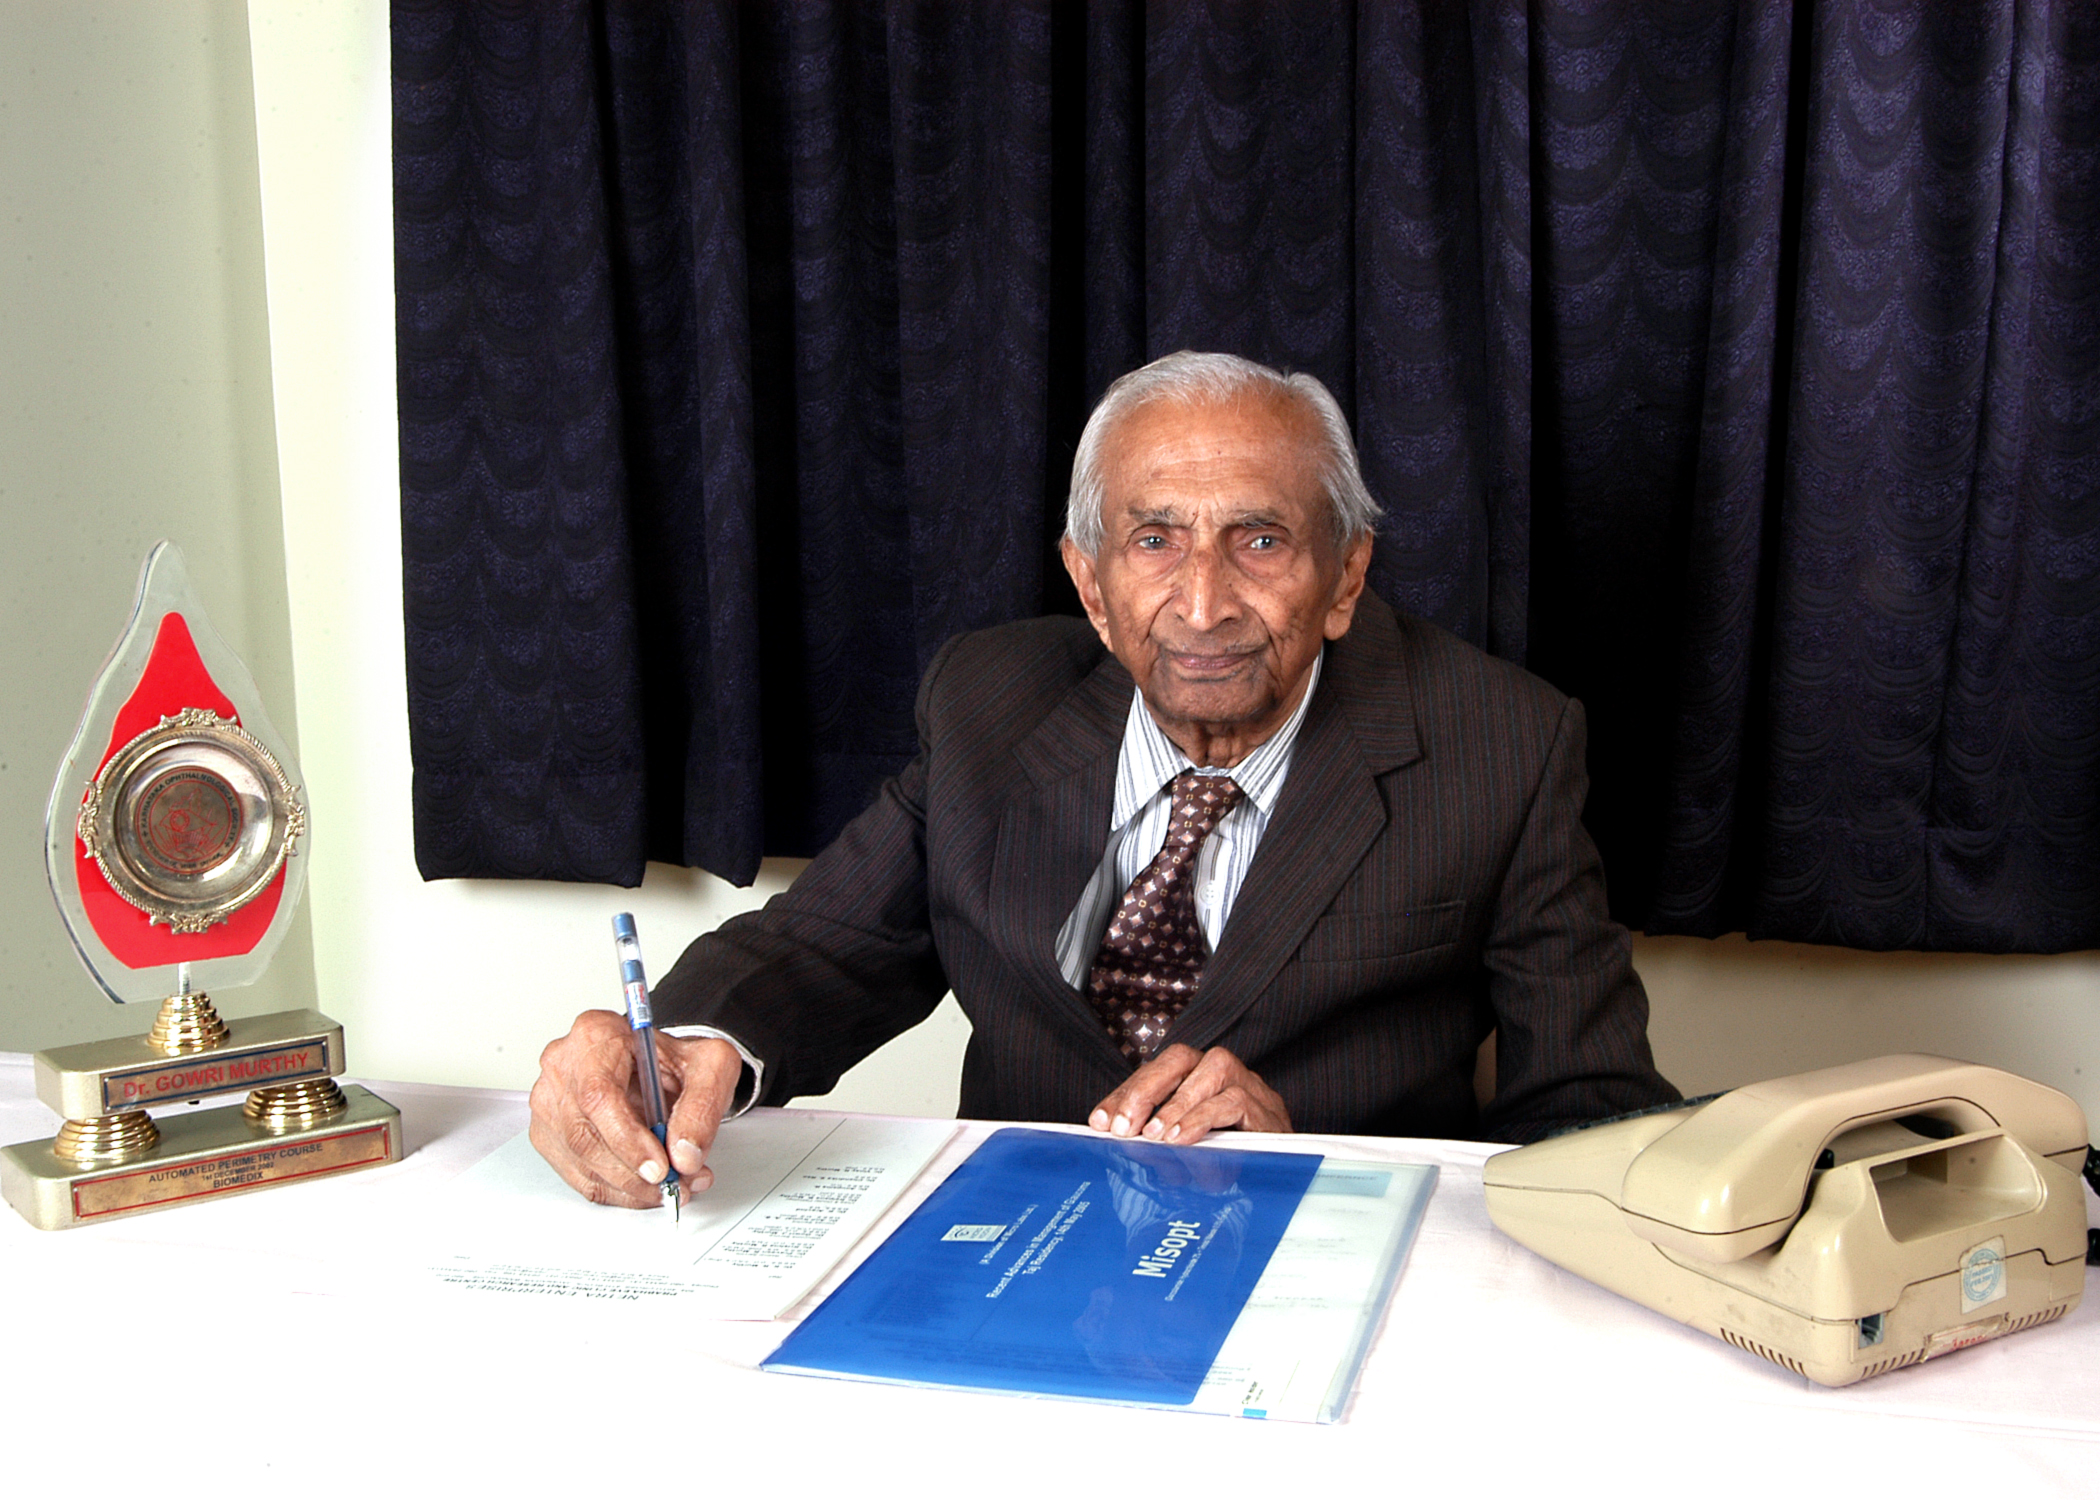 Dr. H. Krishna Moorthy